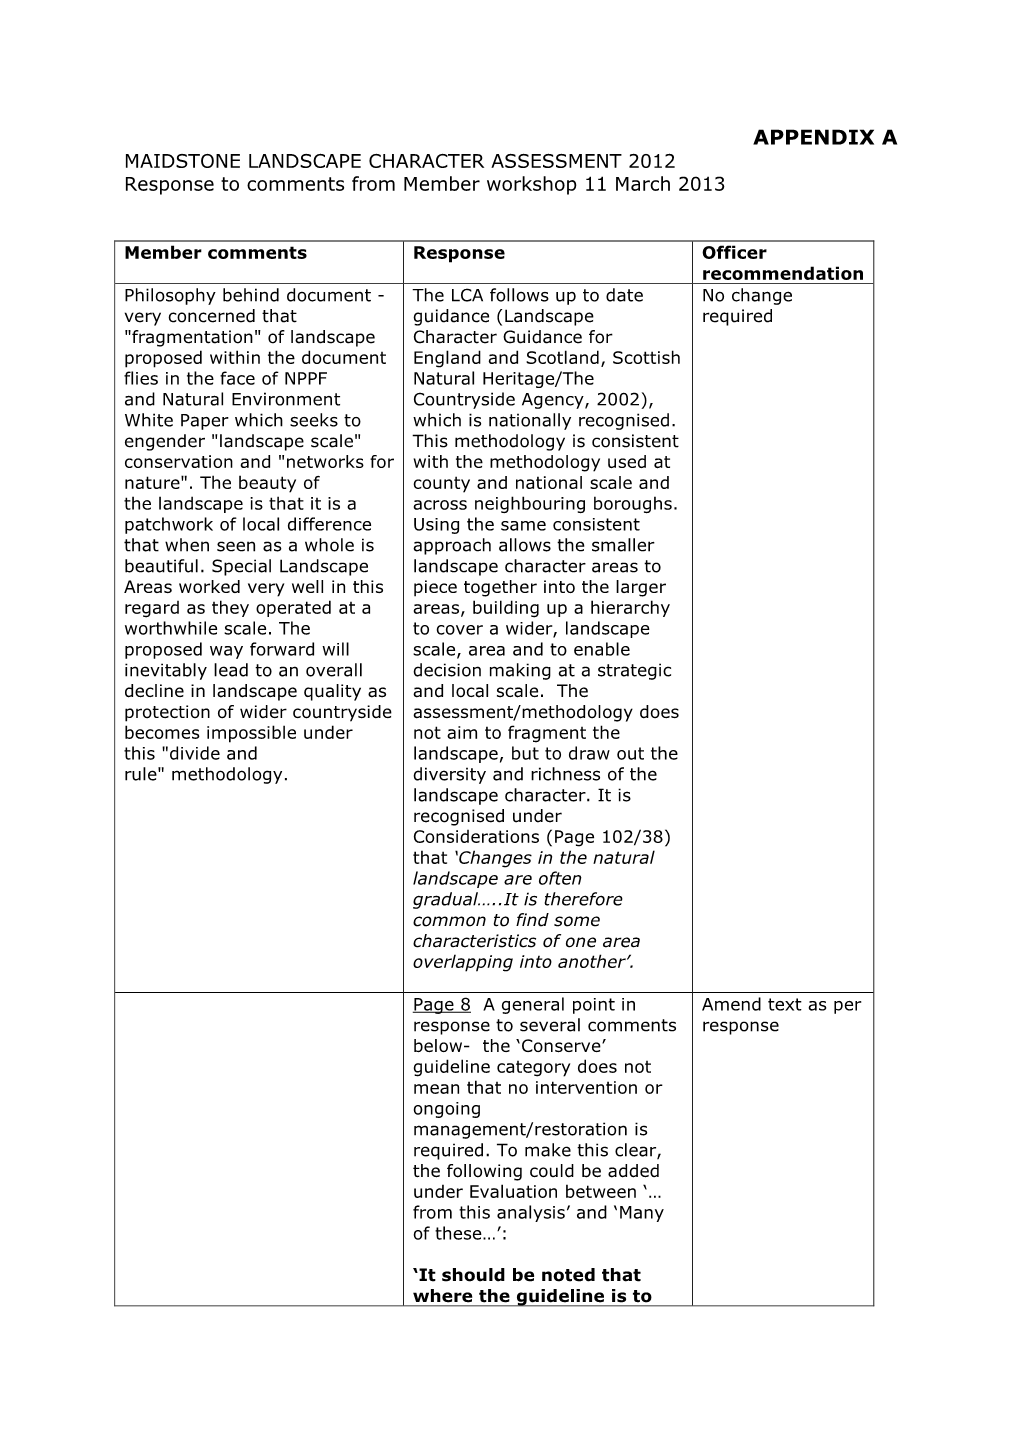 Enc. 1 for Maidstone Landscape Character Assessment 2012